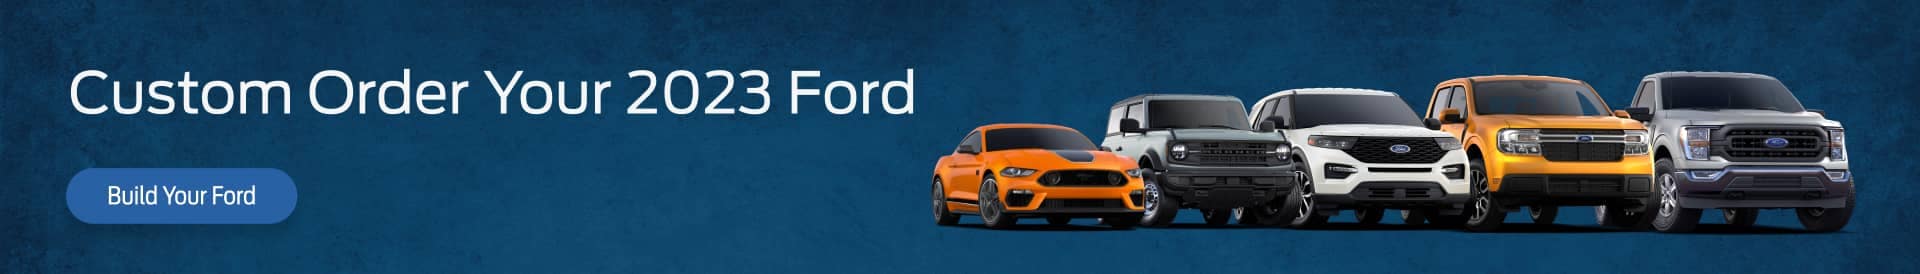 custom order 2023 ford vehicle desktop